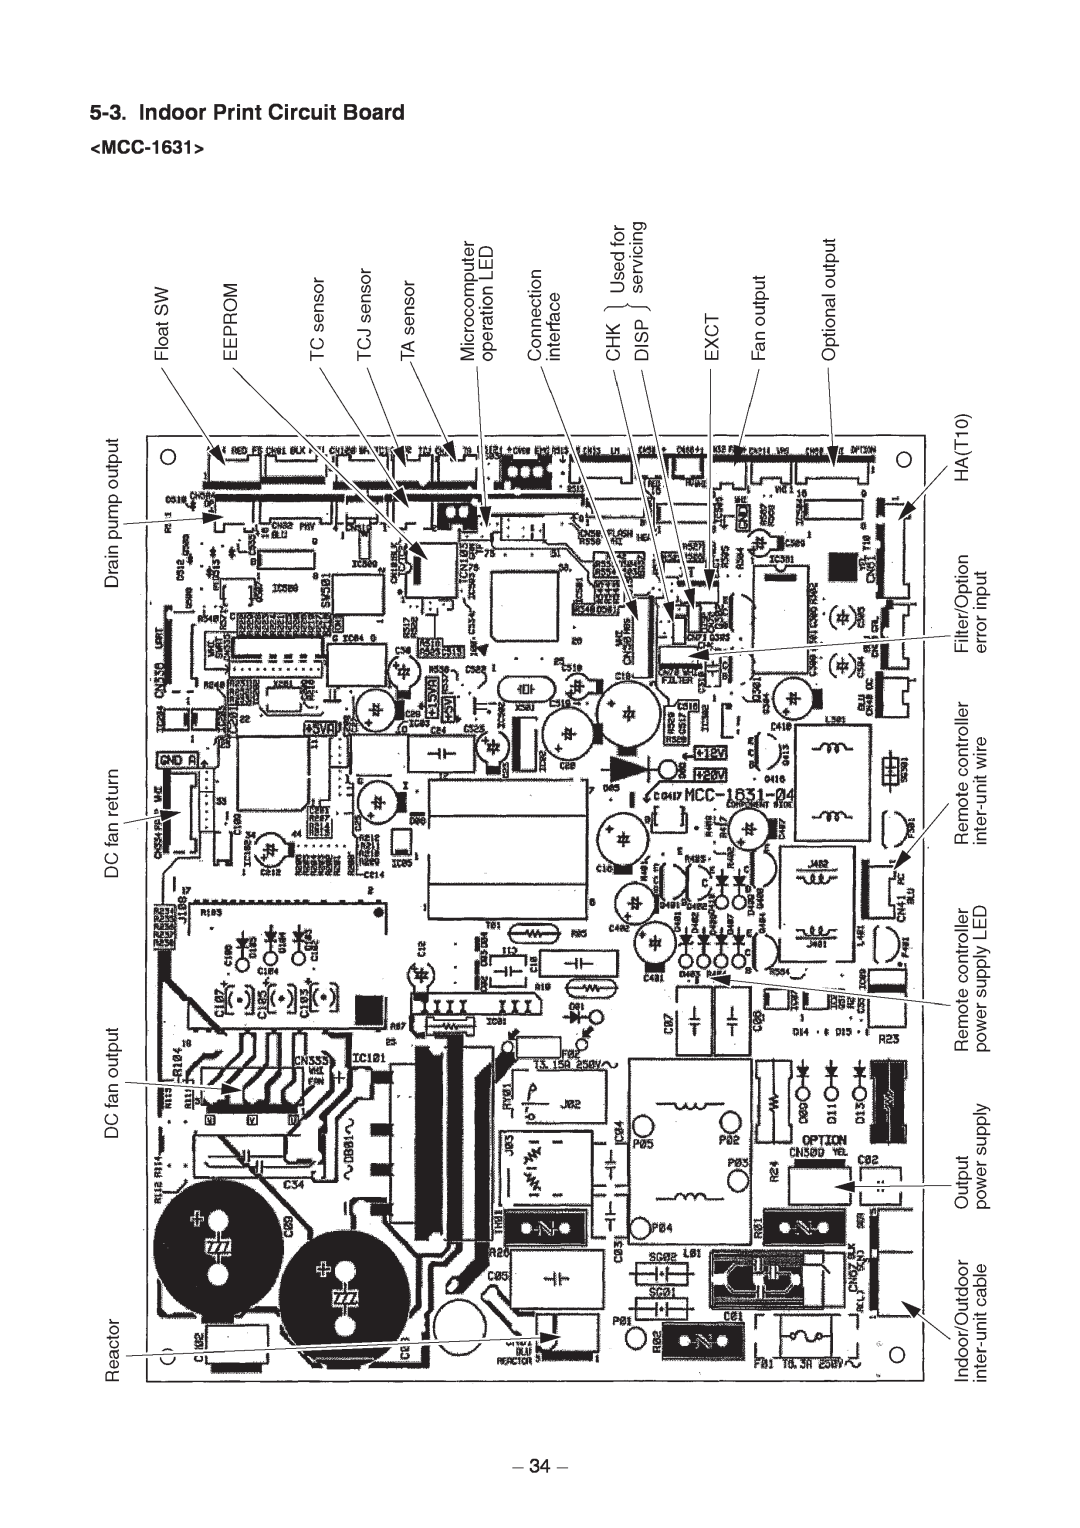 Toshiba RAV-SM806BT-E, RAV-SM406BT-TR, RAV-SM1406BT-E, RAV-SM1606BT-E, RAV-SM1606BT-TR Indoor Print Circuit Board, MCC-1631 